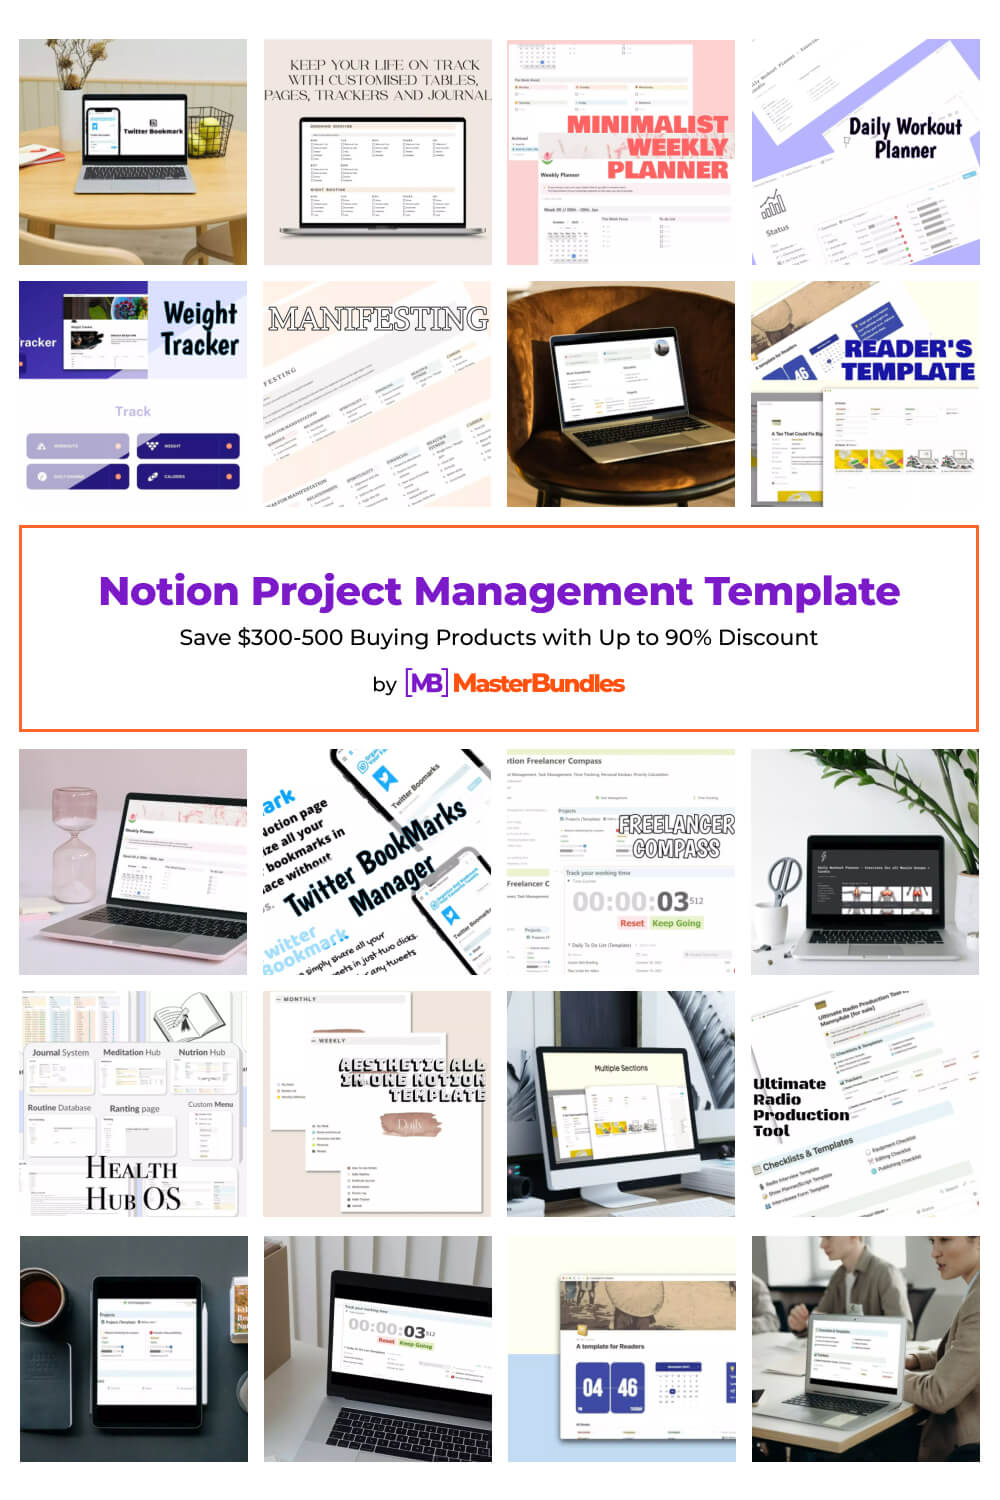 notion project management template pinterest image.